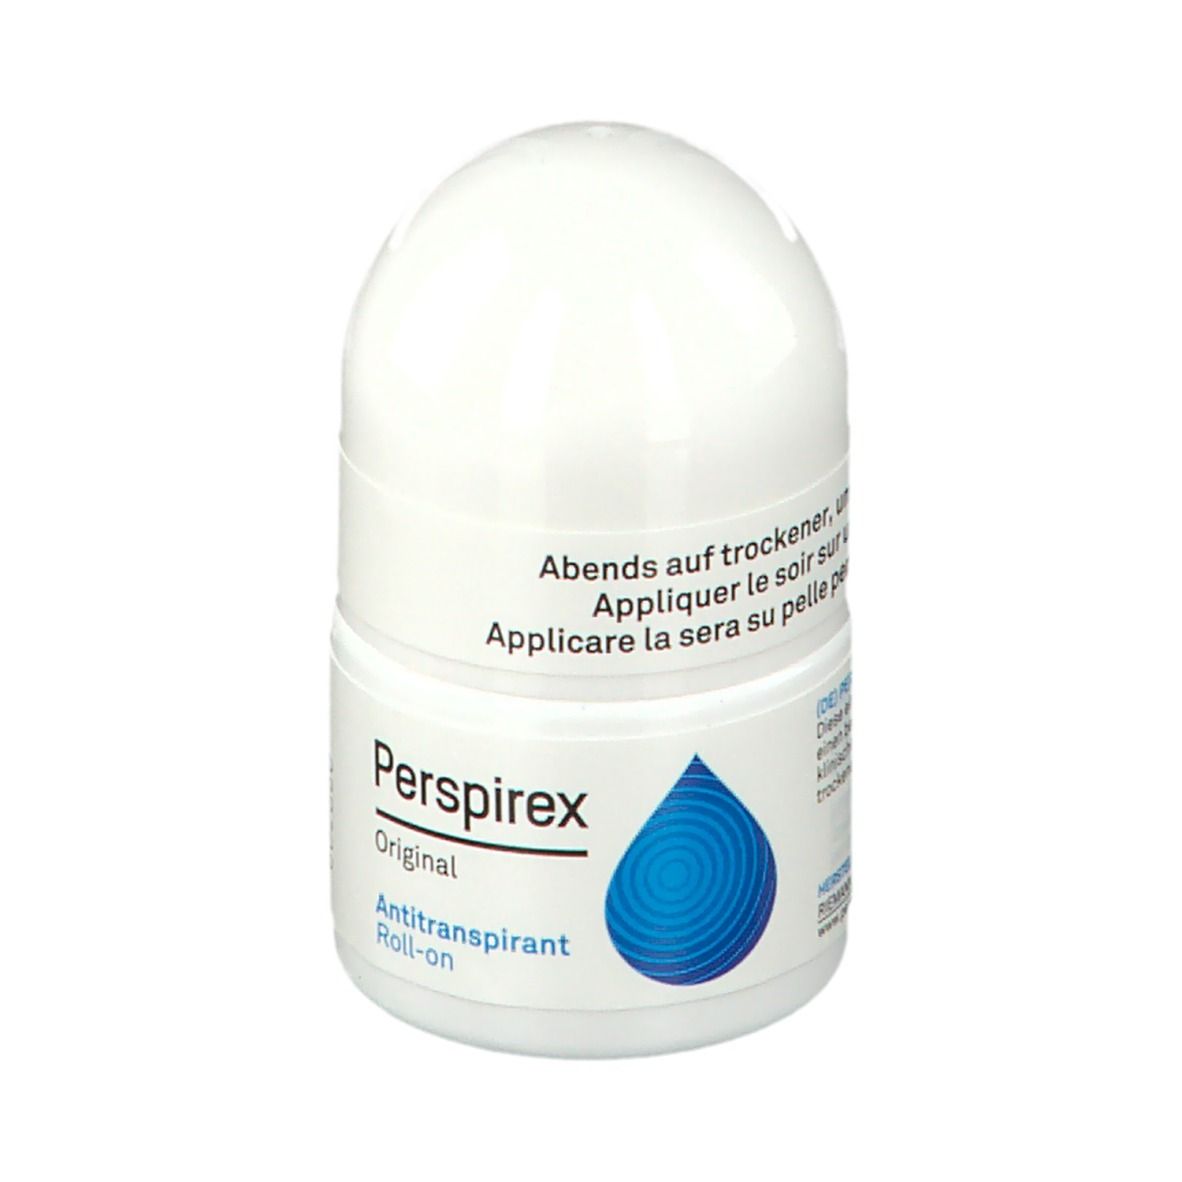 Image of Perspirex Original Antitranspirant Roll-on